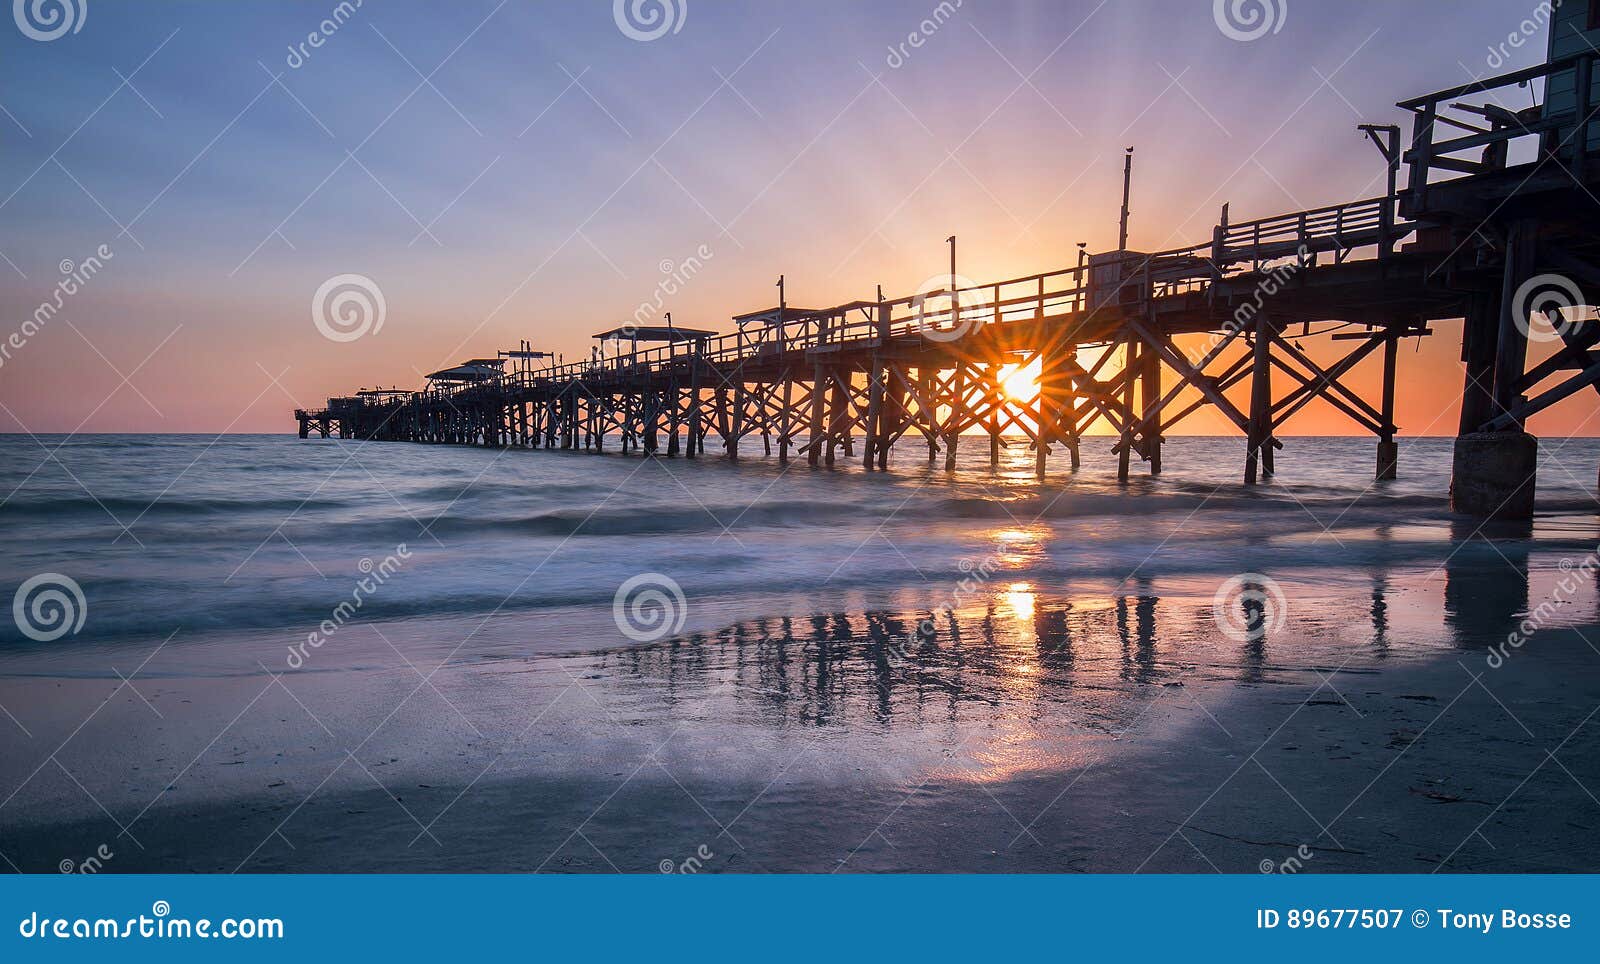 Fishing Pier at Sunset stock image. Image of morning - 89677507